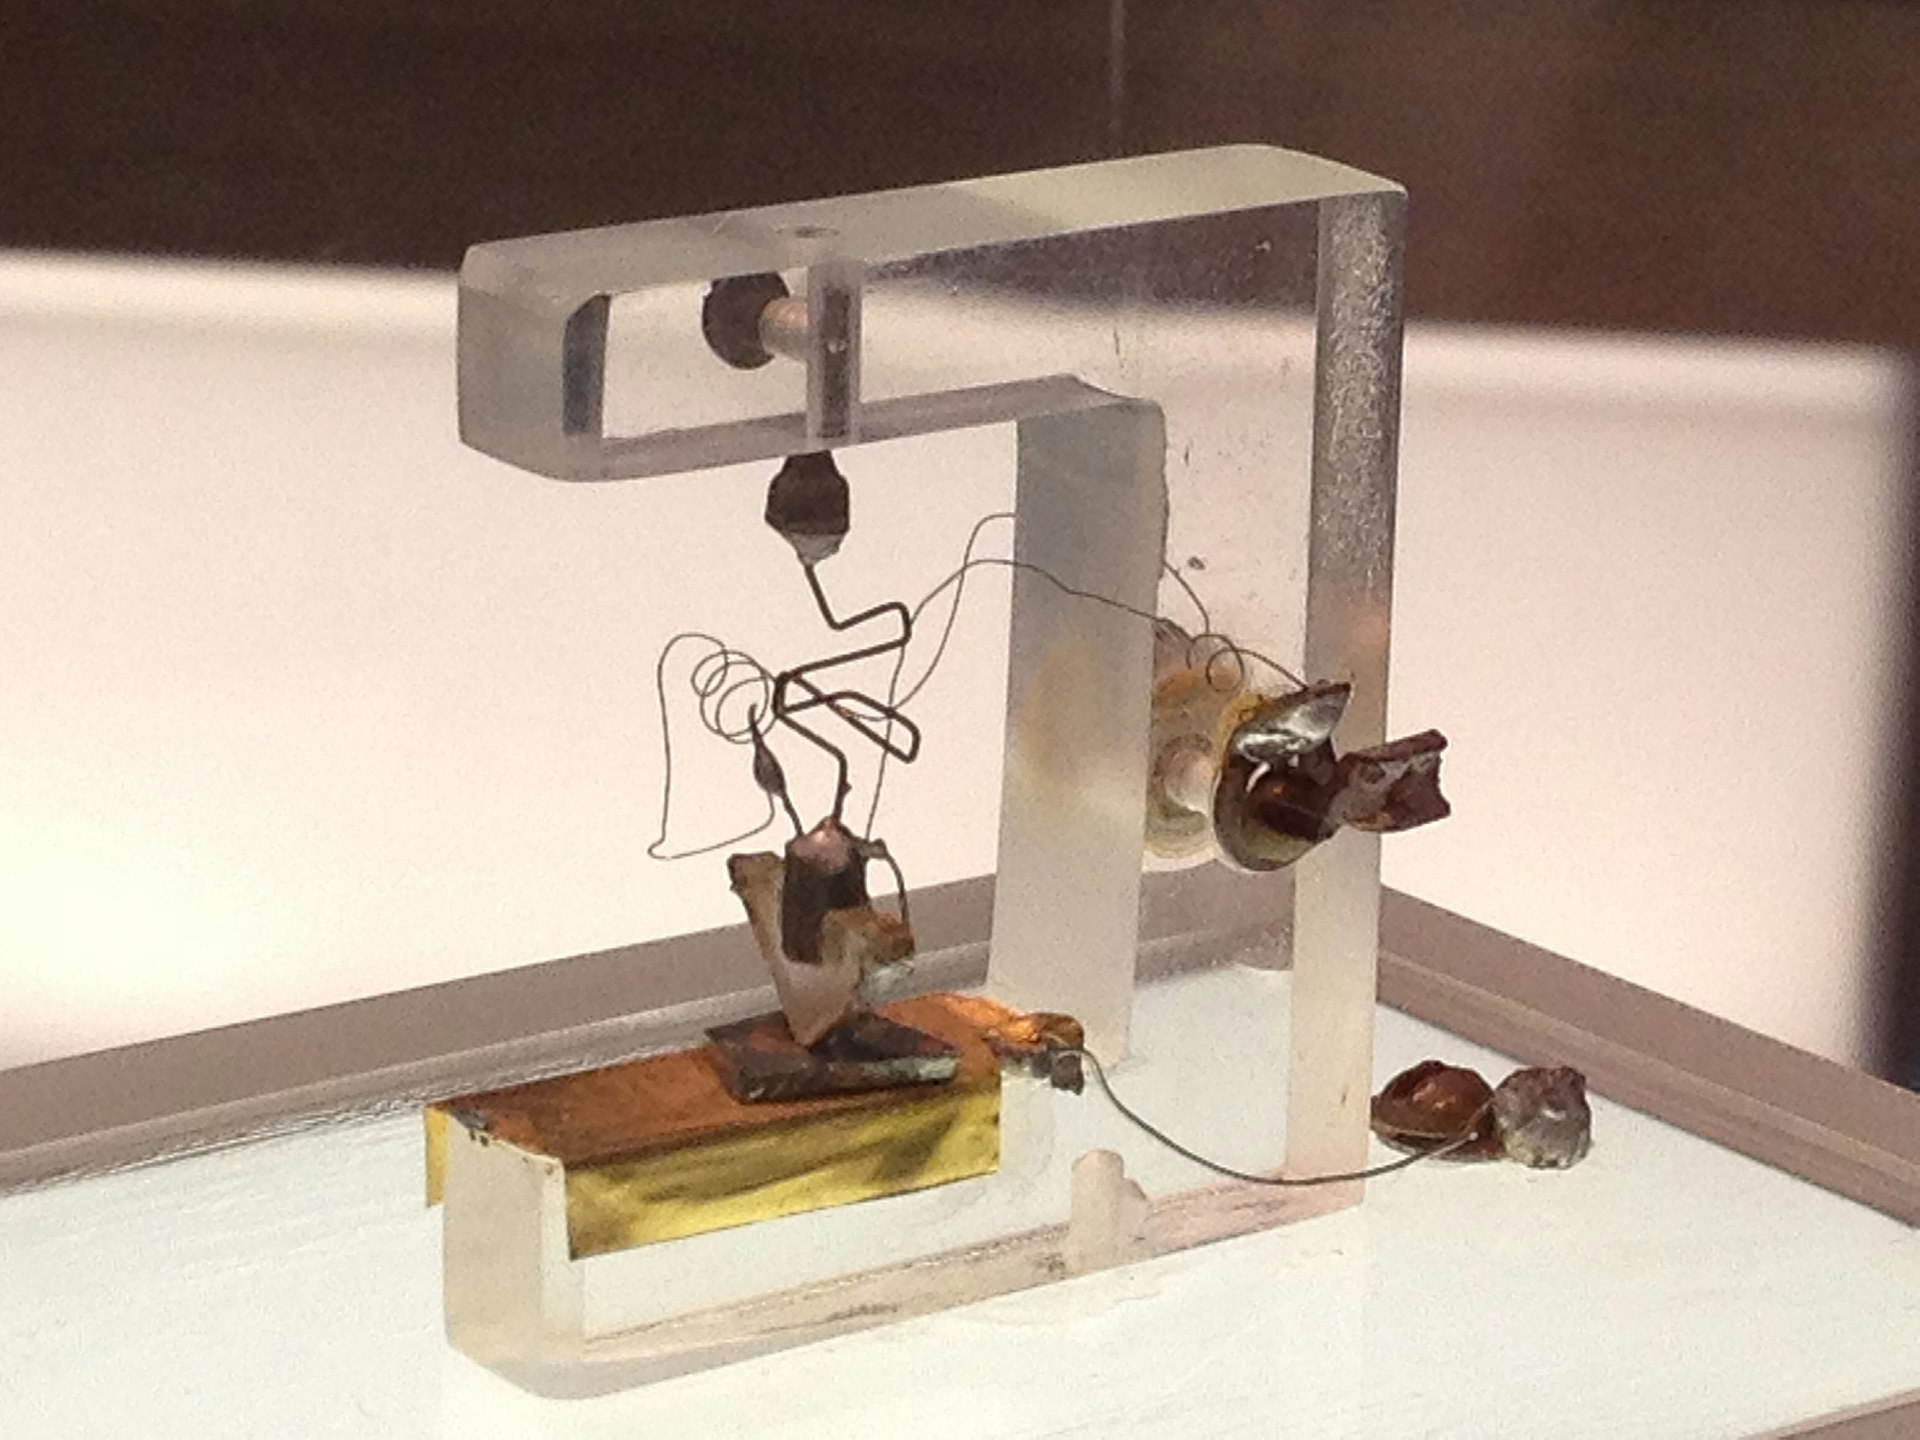 1st-Transistor.jpeg (cc3.0-SA)